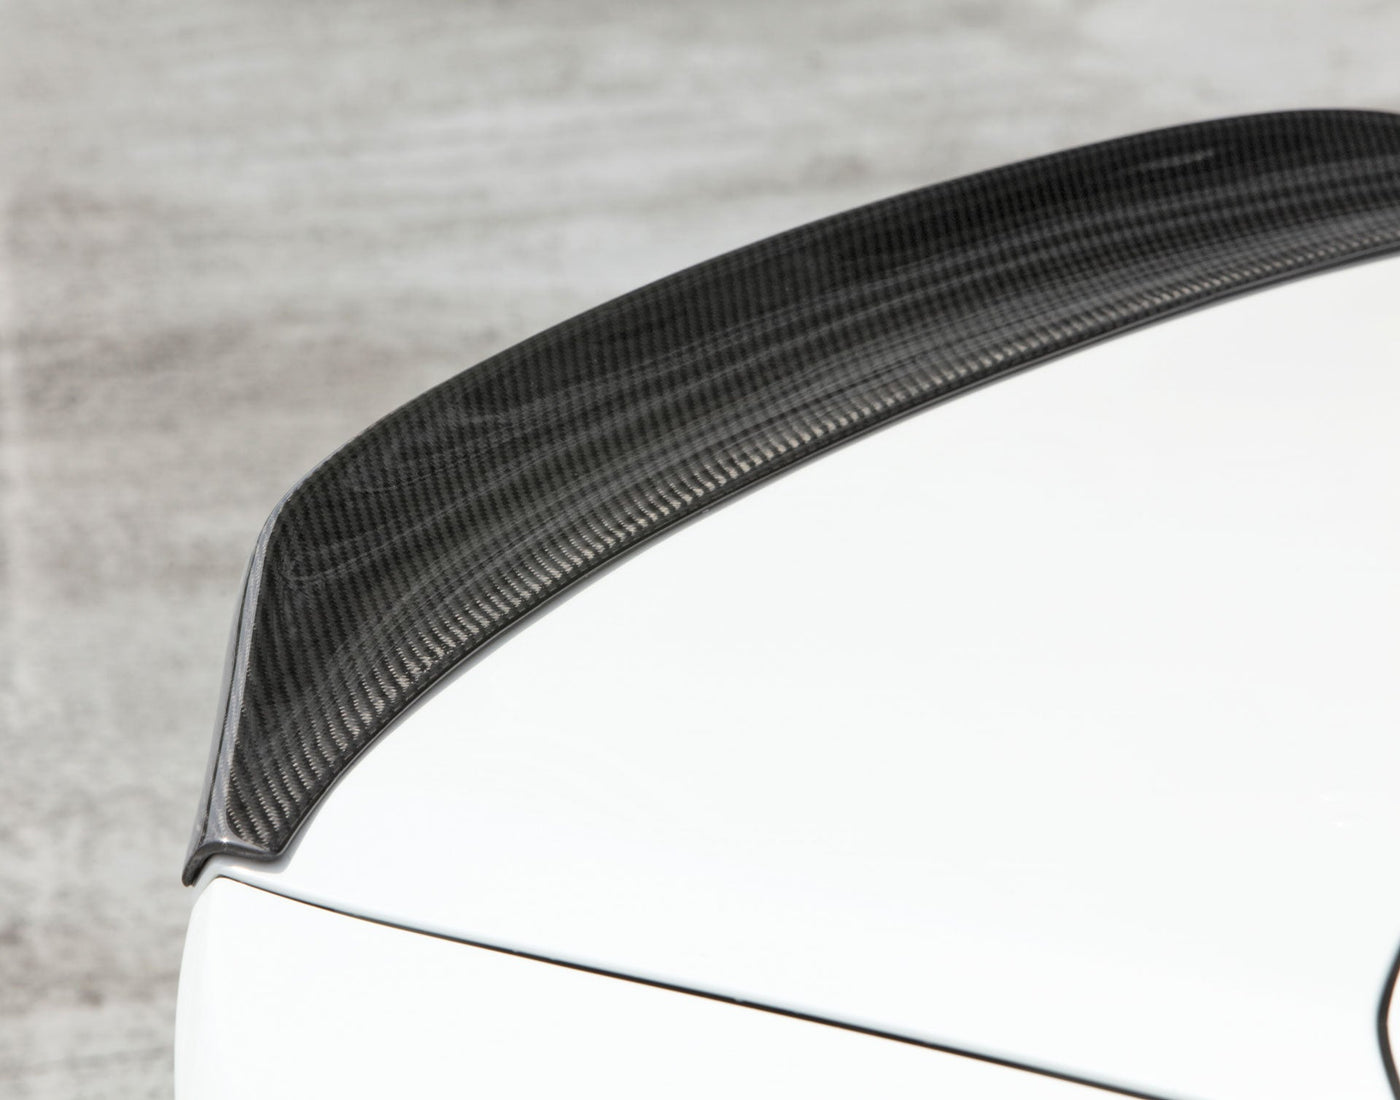 Carbon Fiber Rear Spoiler For Aston Martin Vantage Motor Vehicle Frame & Body Parts